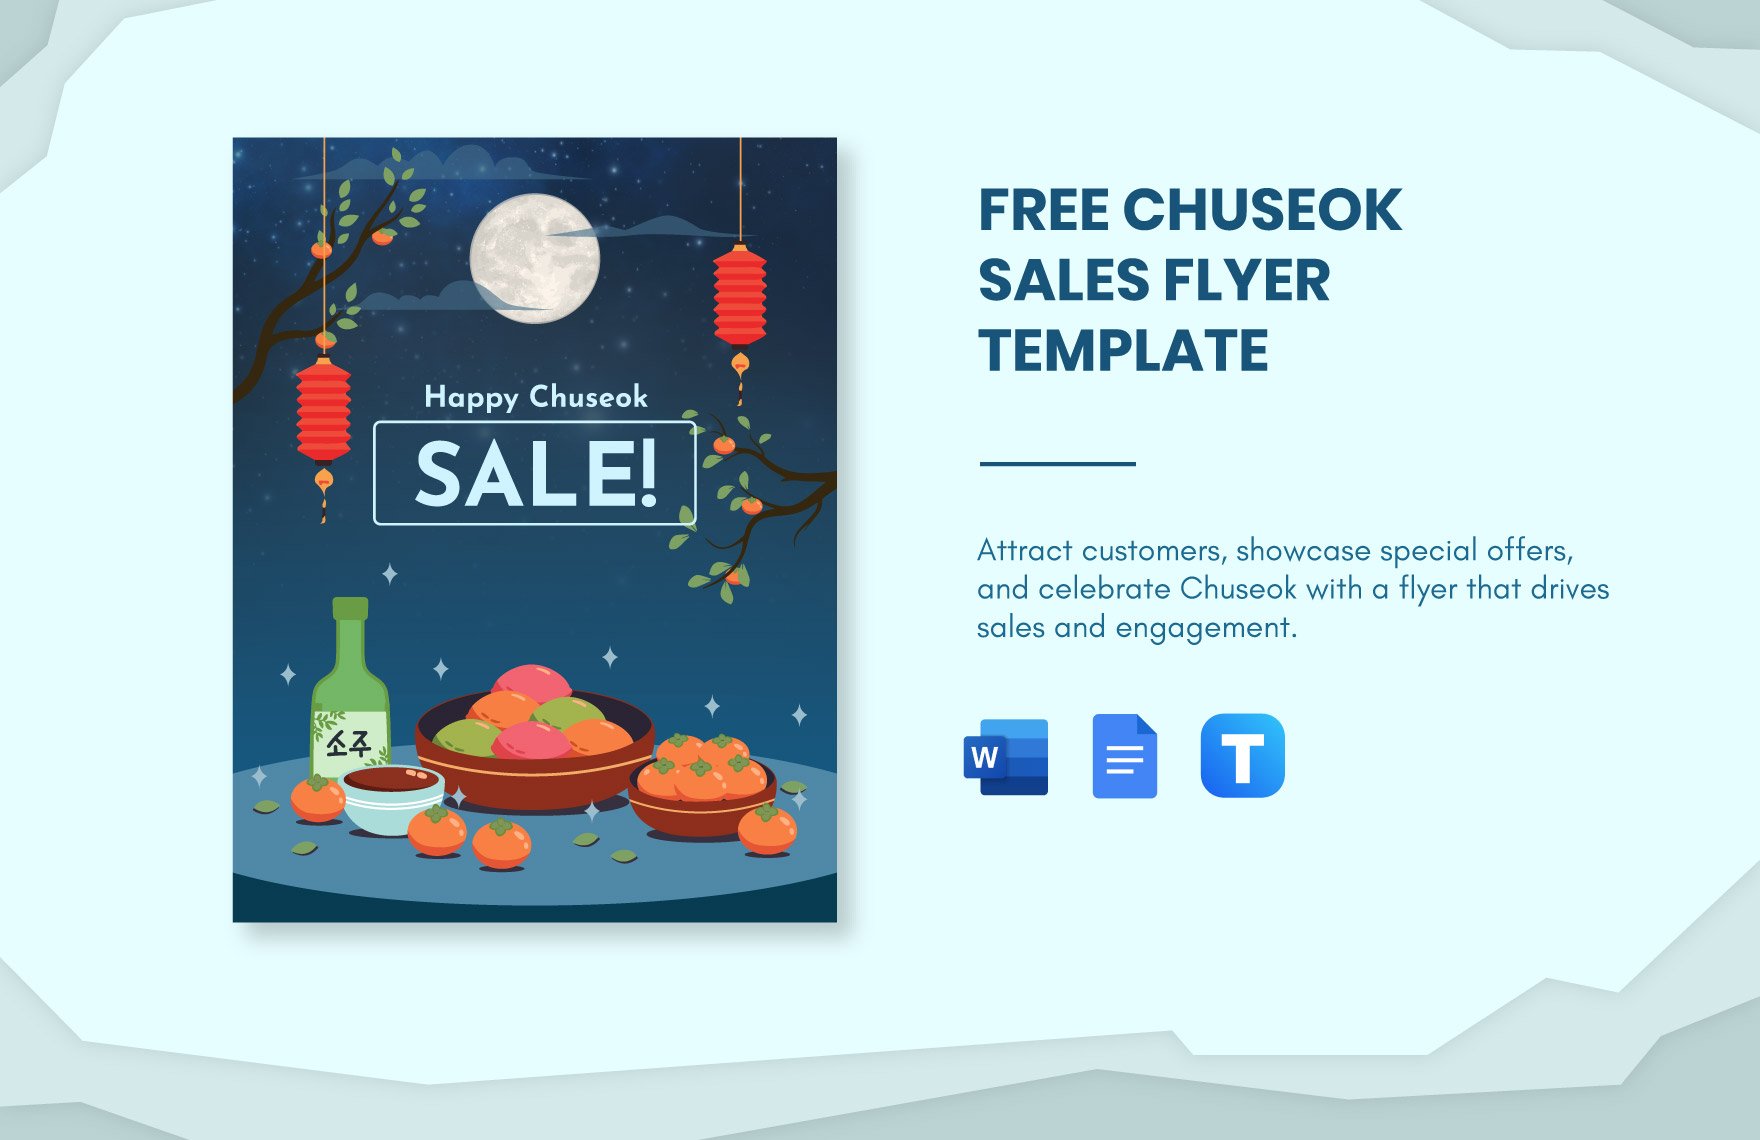 Free Chuseok Sales Flyer Template in Word, Google Docs